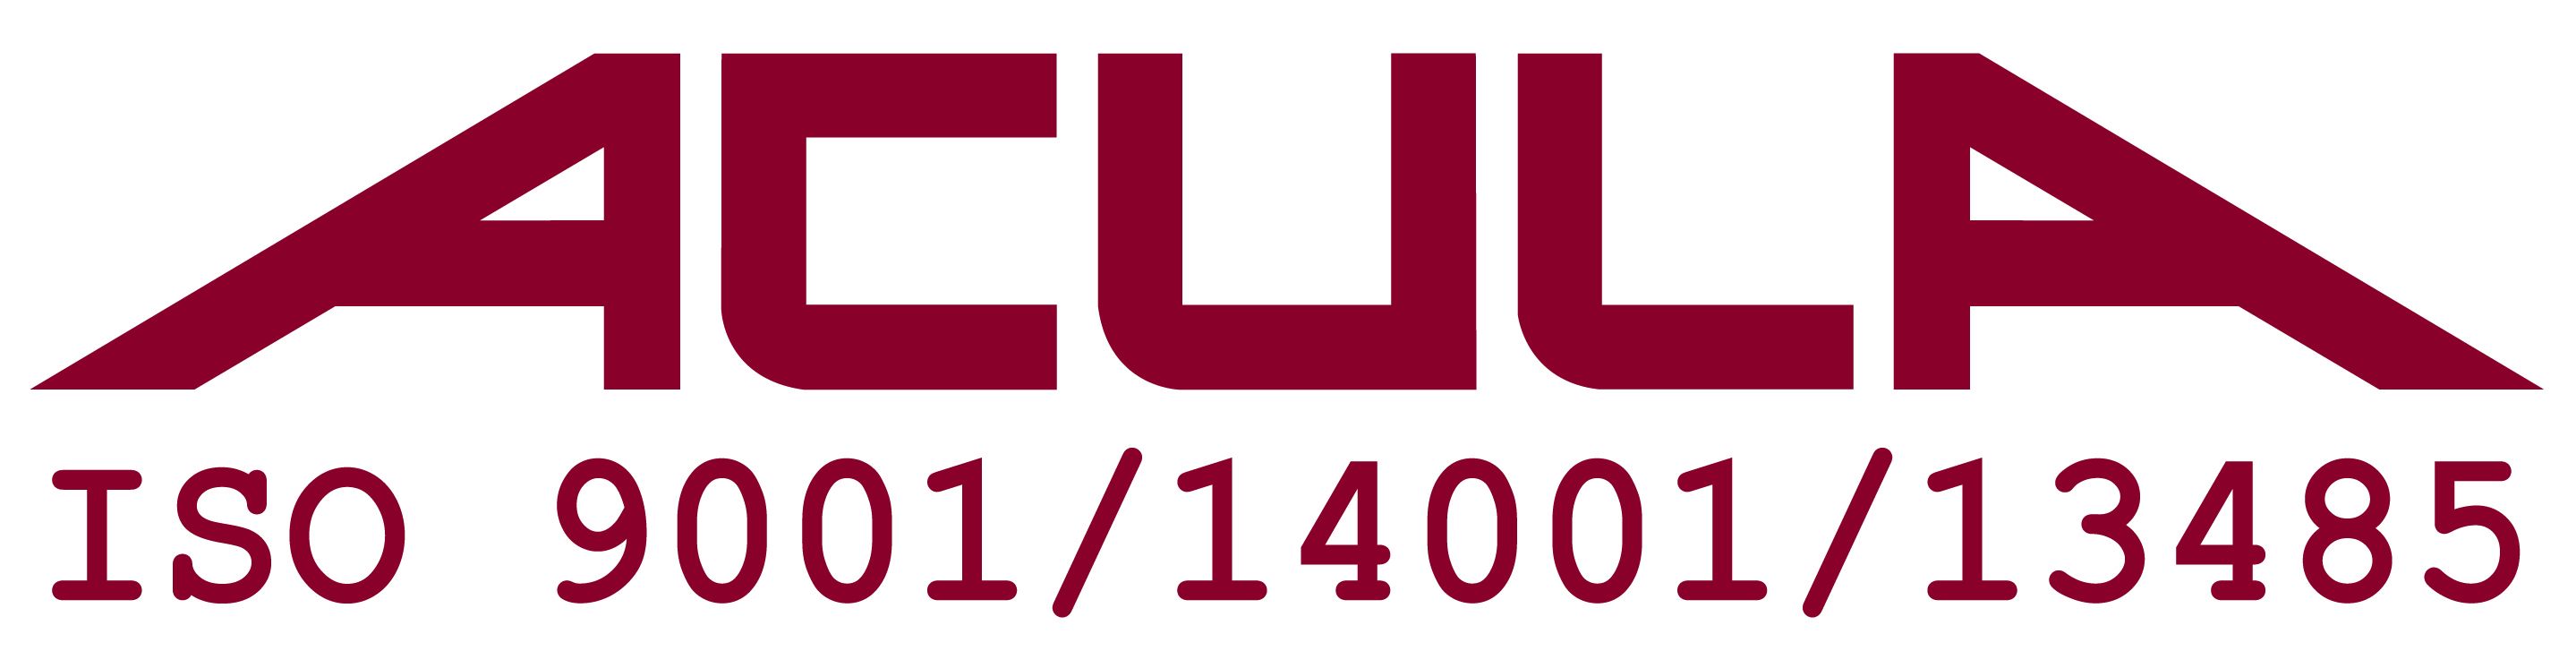 ACULA logo.jpg